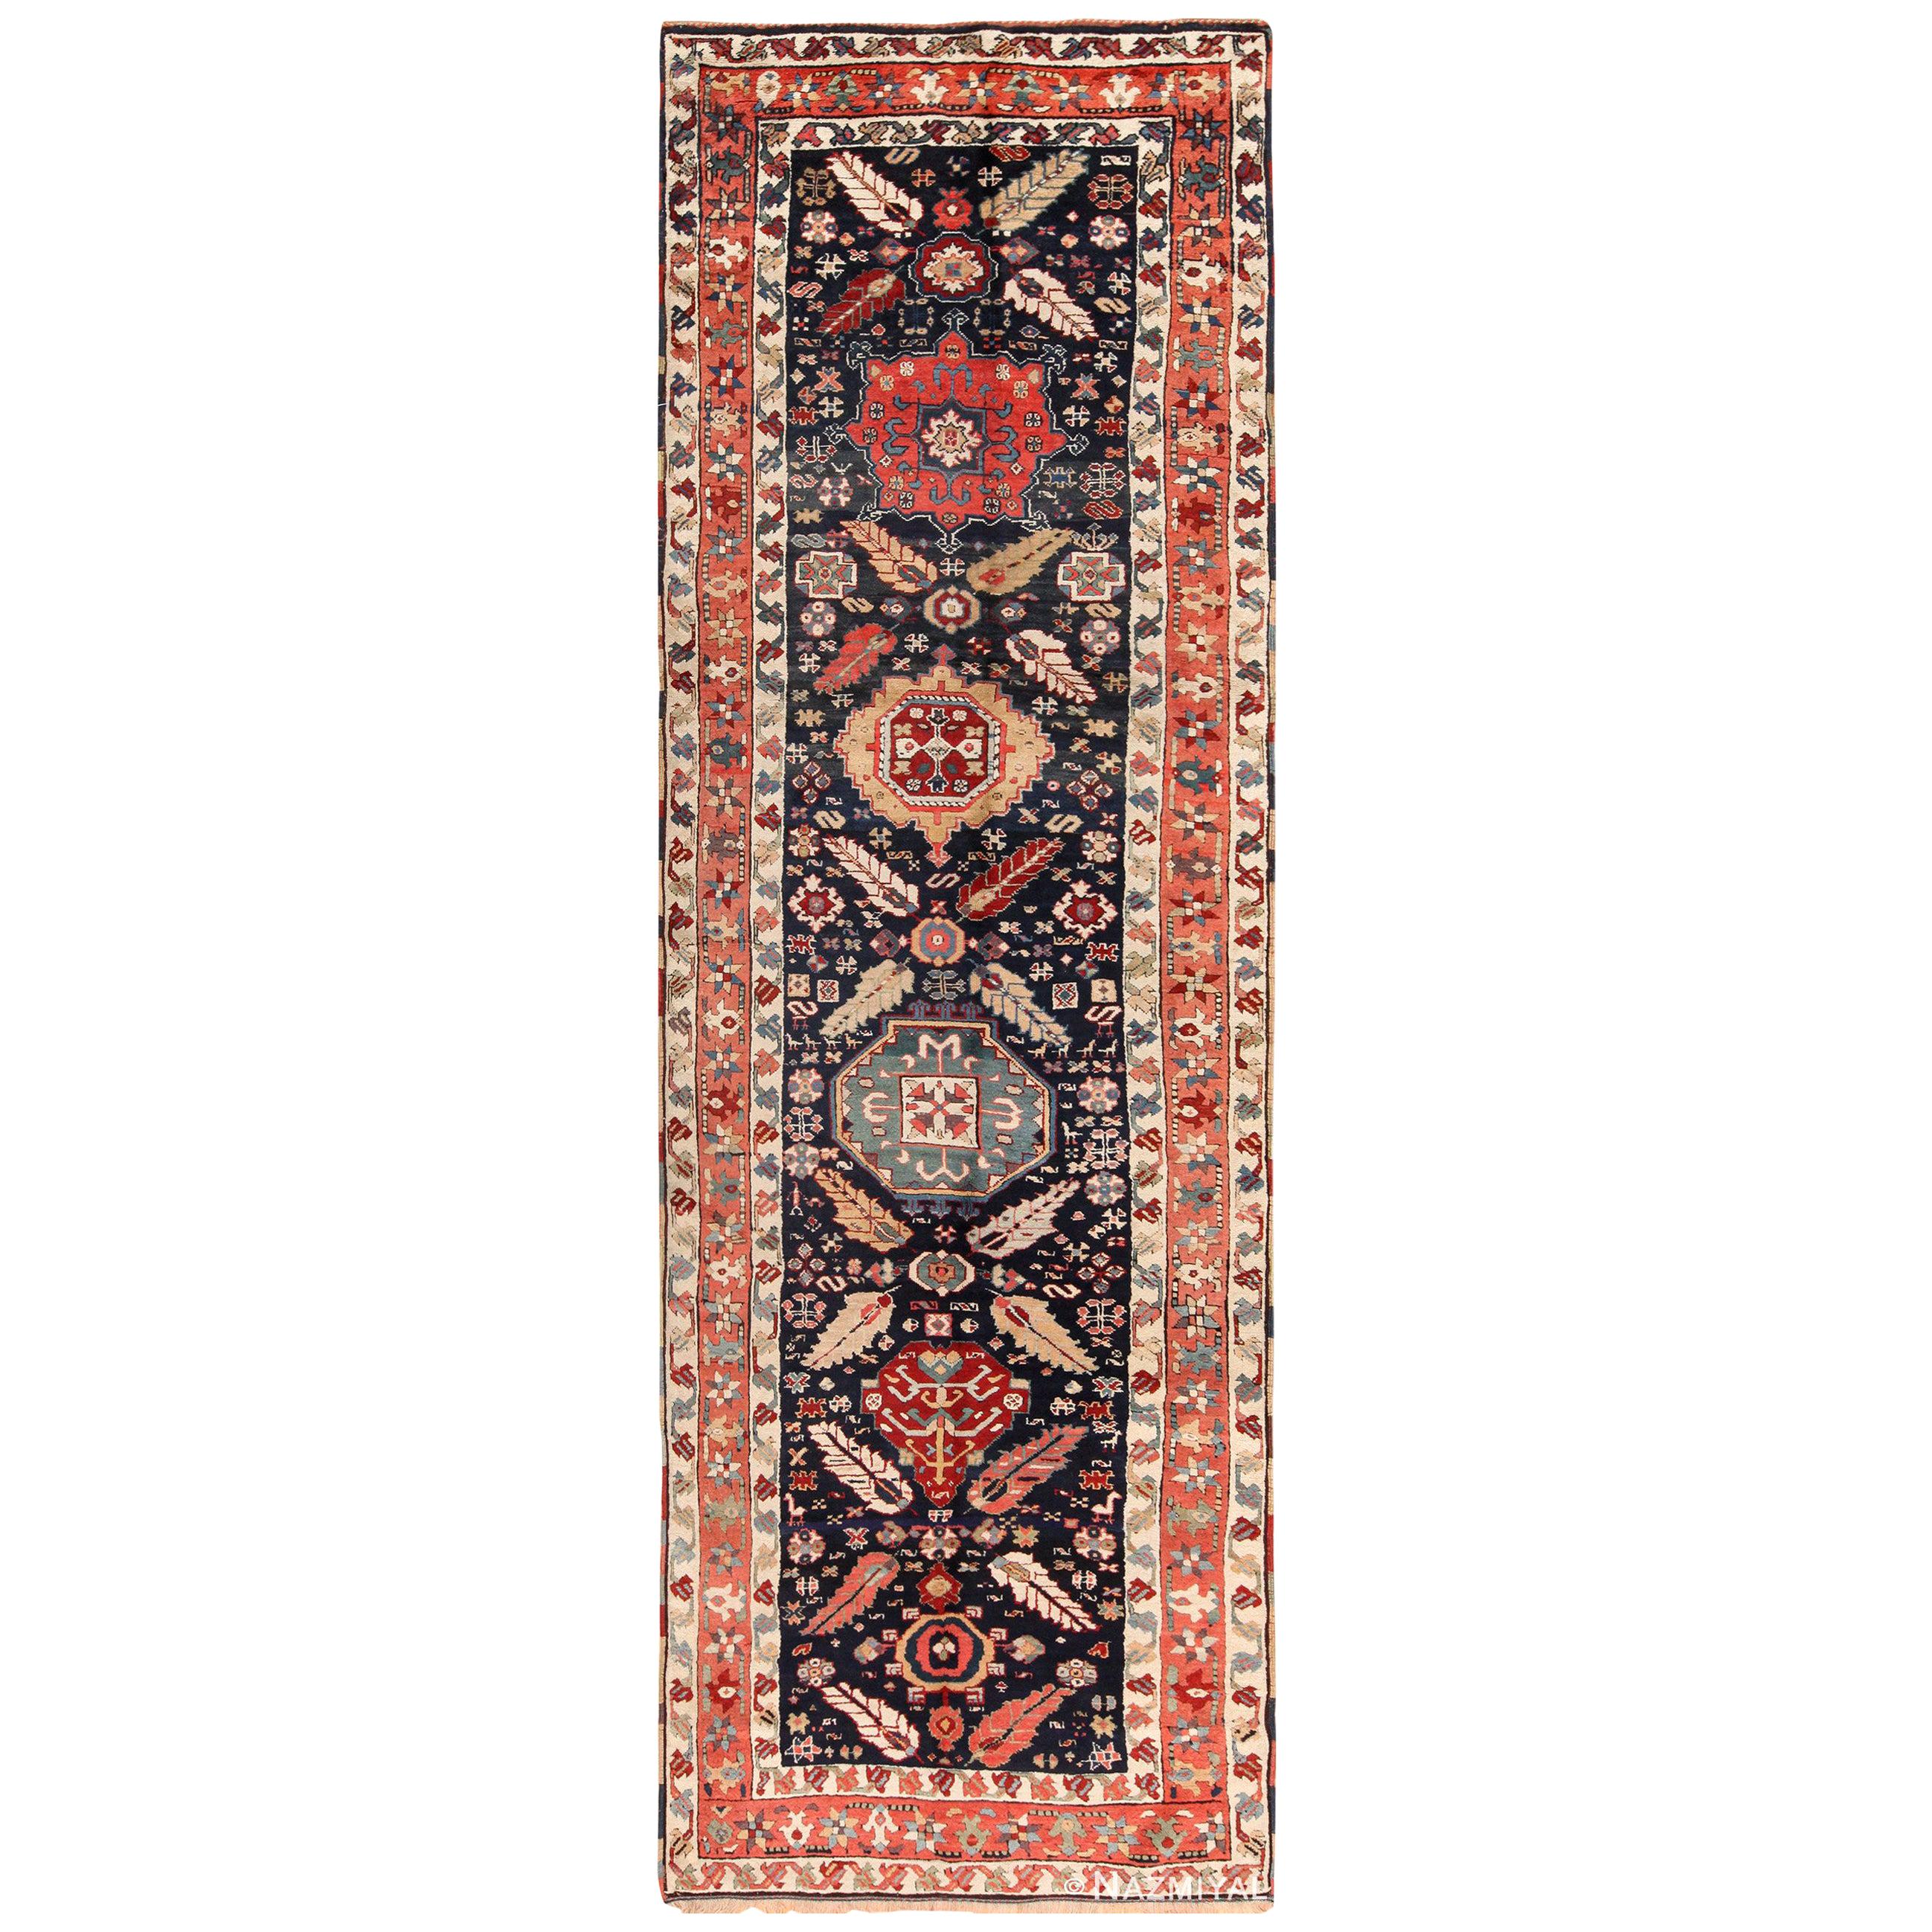 Antique Northwest Persian Runner Rug. 4 ft 3 in x 13 ft